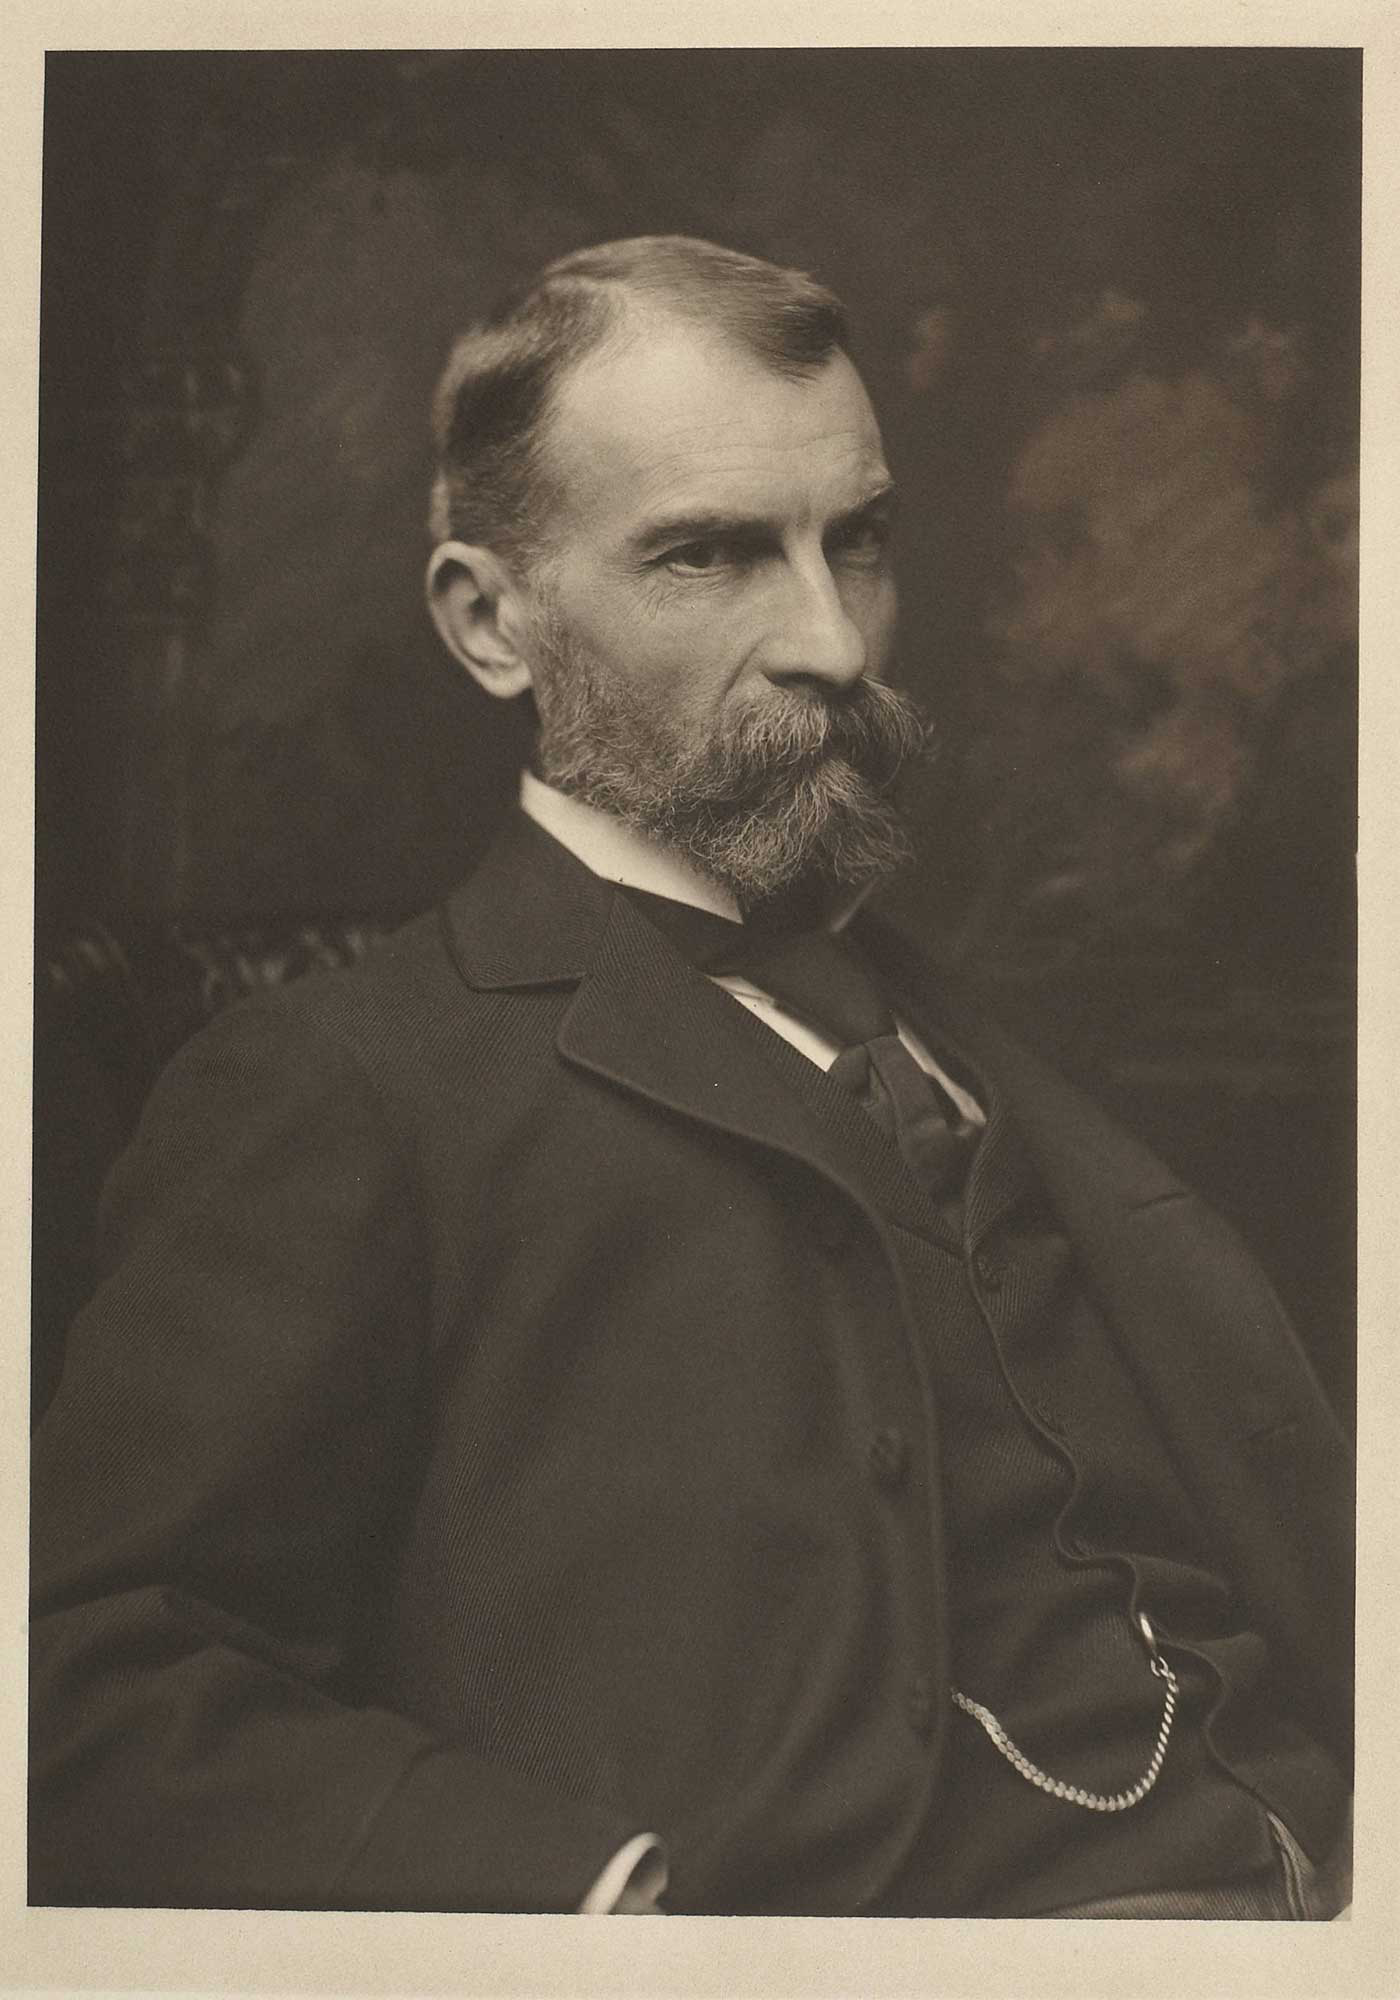 <p>Portrait of Saint Louis businessman Armand Derivaux taken by noted photographer J.C. Strauss circa 1895</p>
